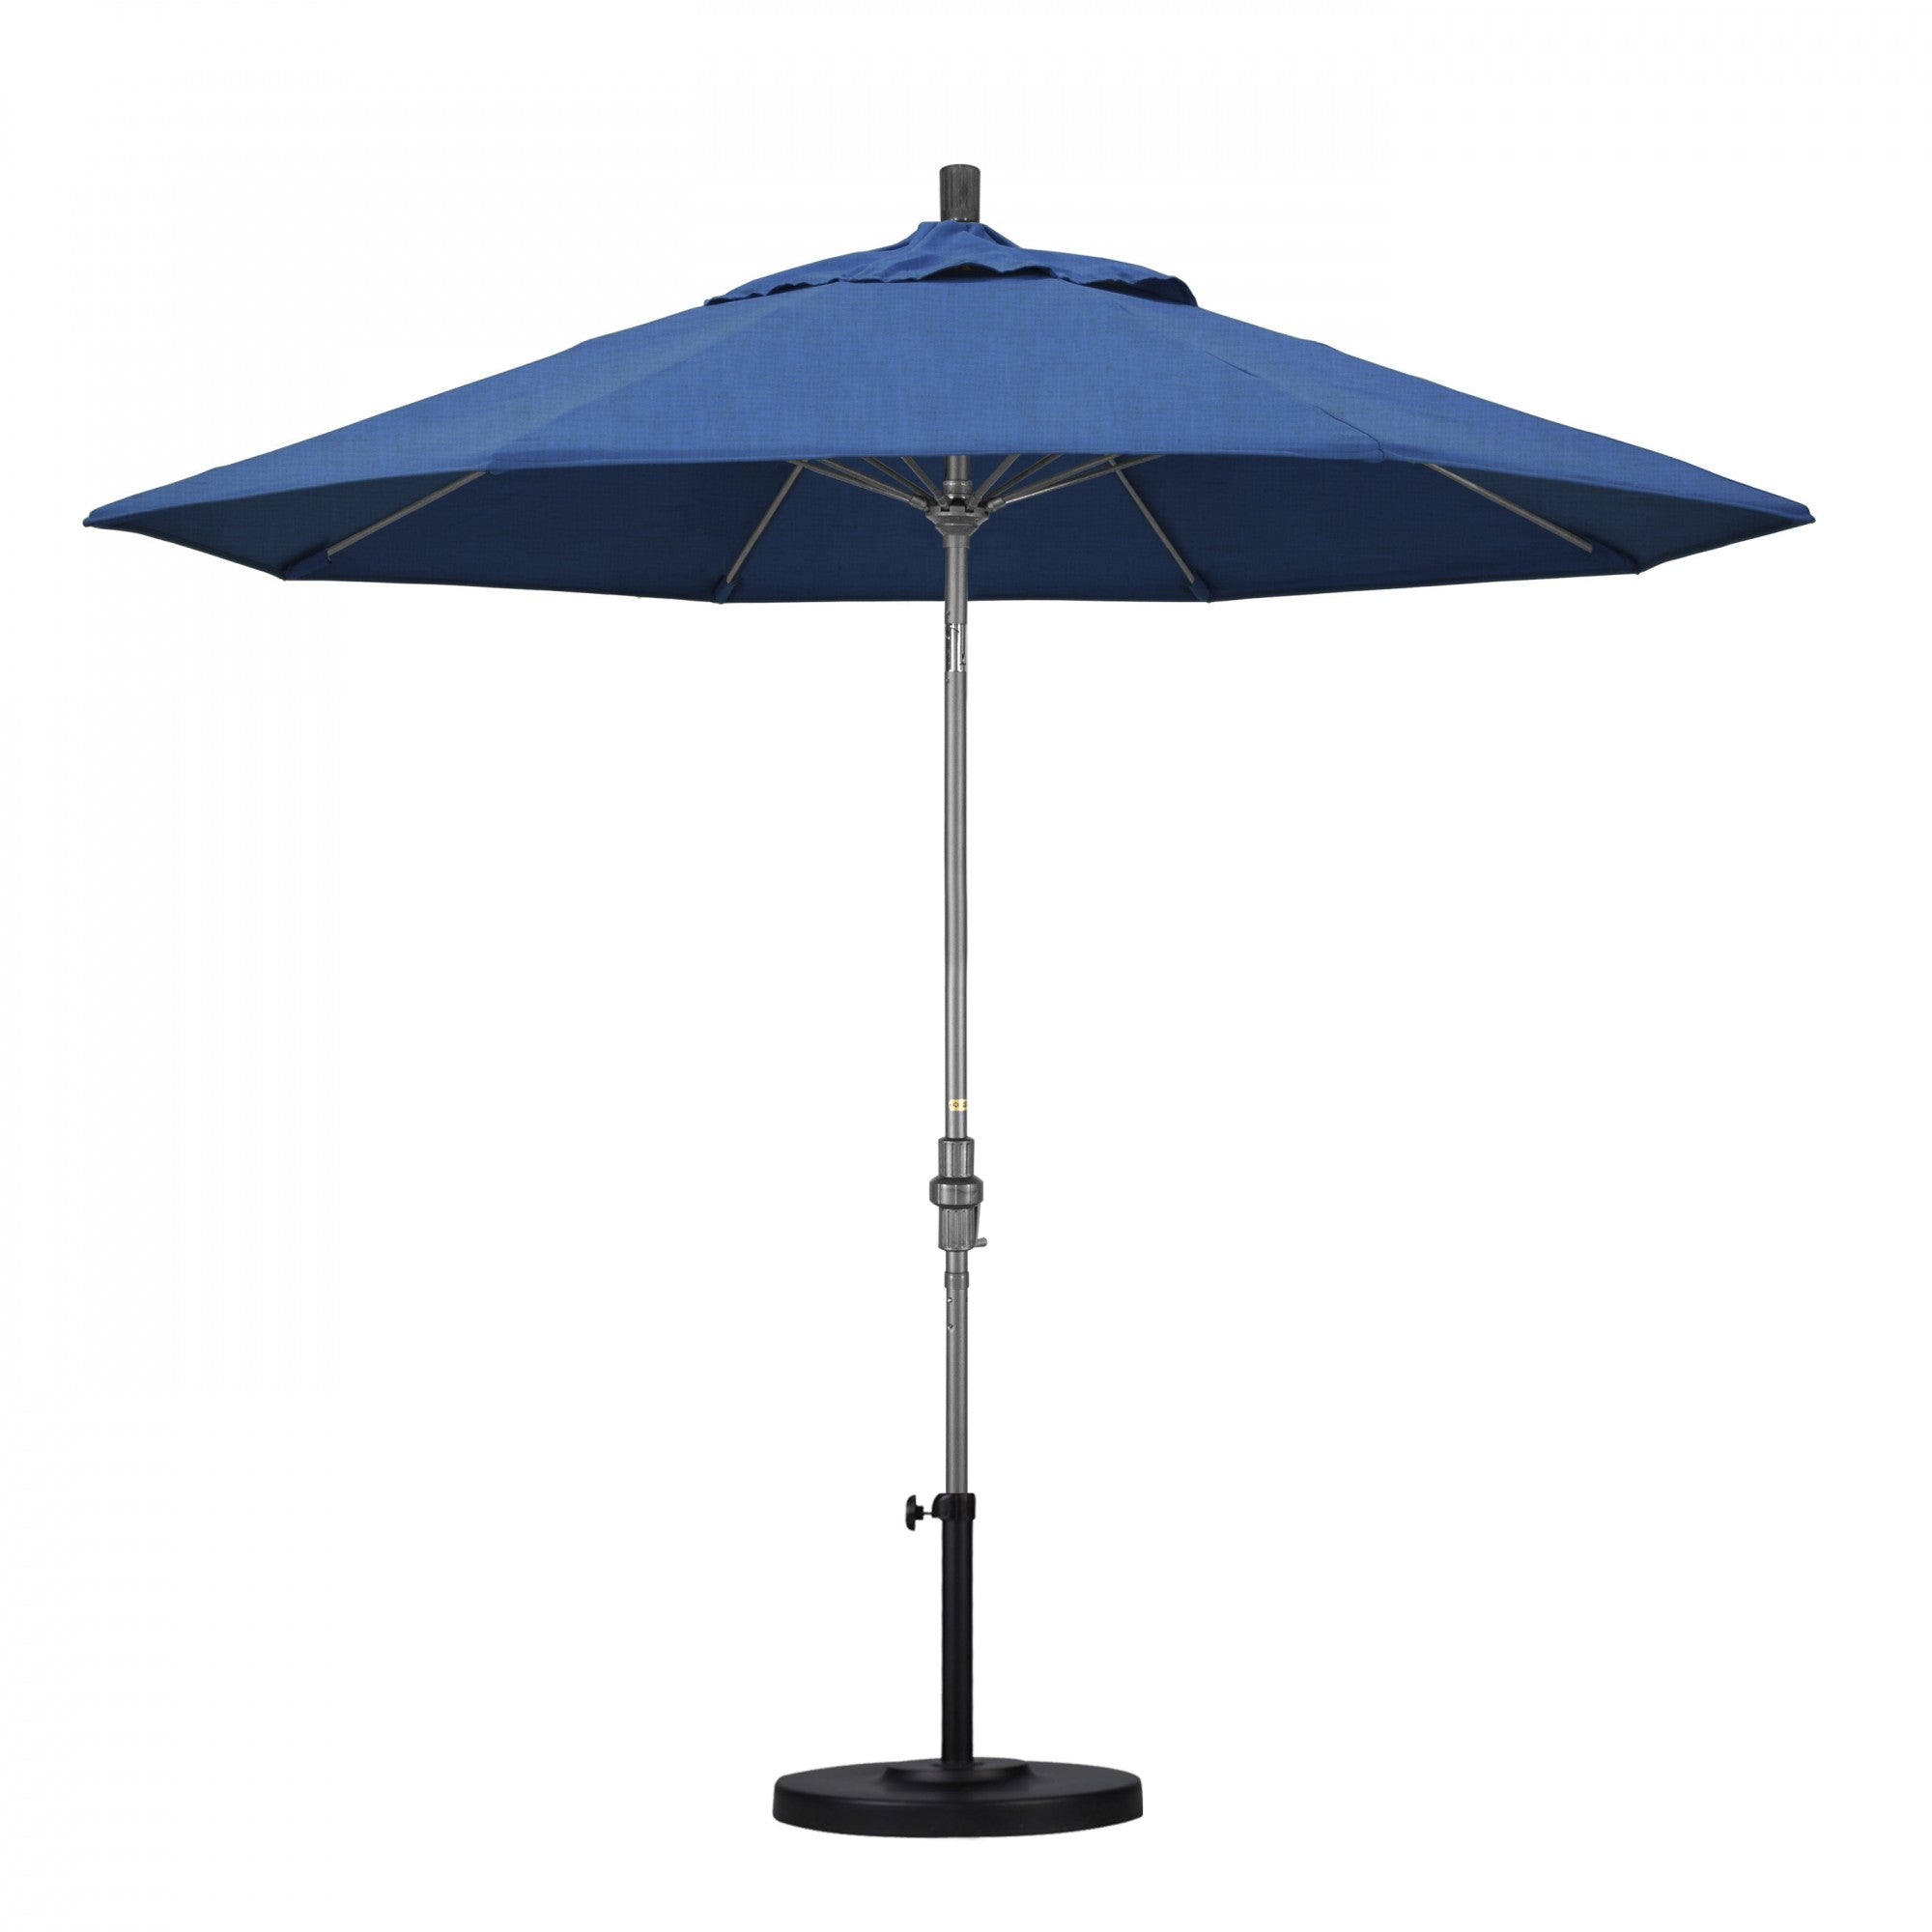 California Umbrella - 9' - Patio Umbrella Umbrella - Aluminum Pole - Regatta - Sunbrella  - GSCUF908010-5493